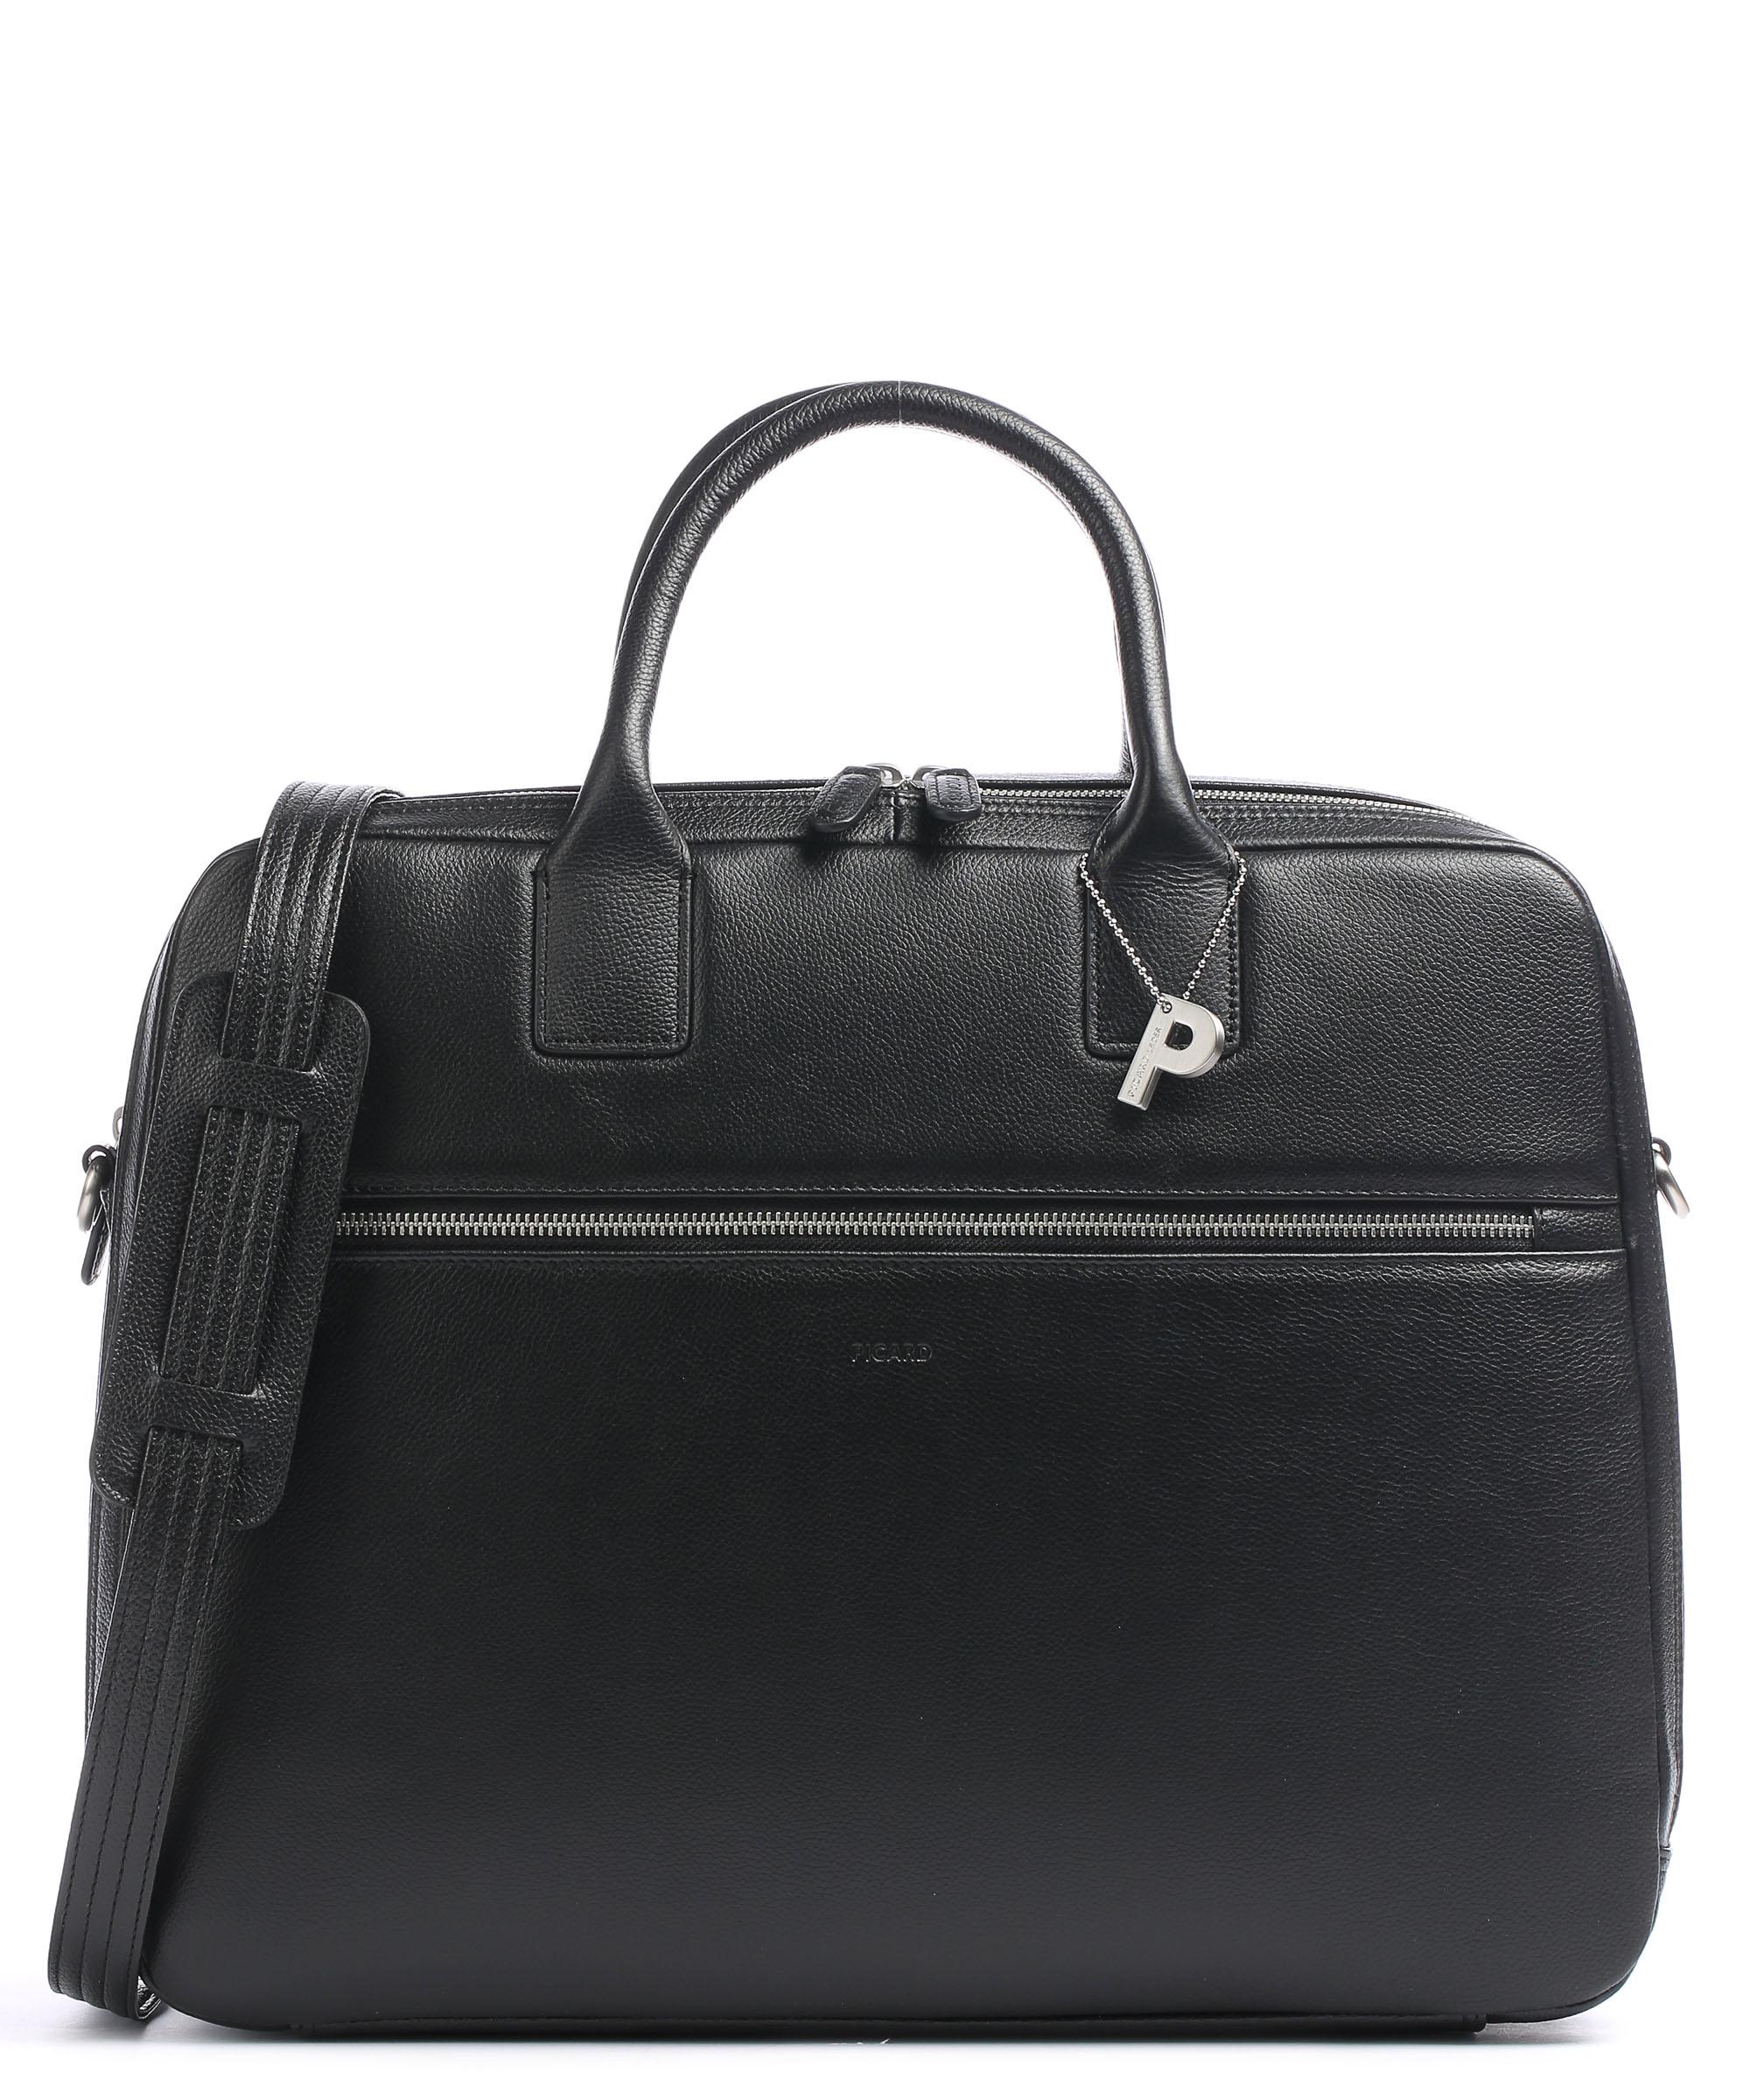 Amazon.com: Picard Shoulder Bag, Black : Clothing, Shoes & Jewelry